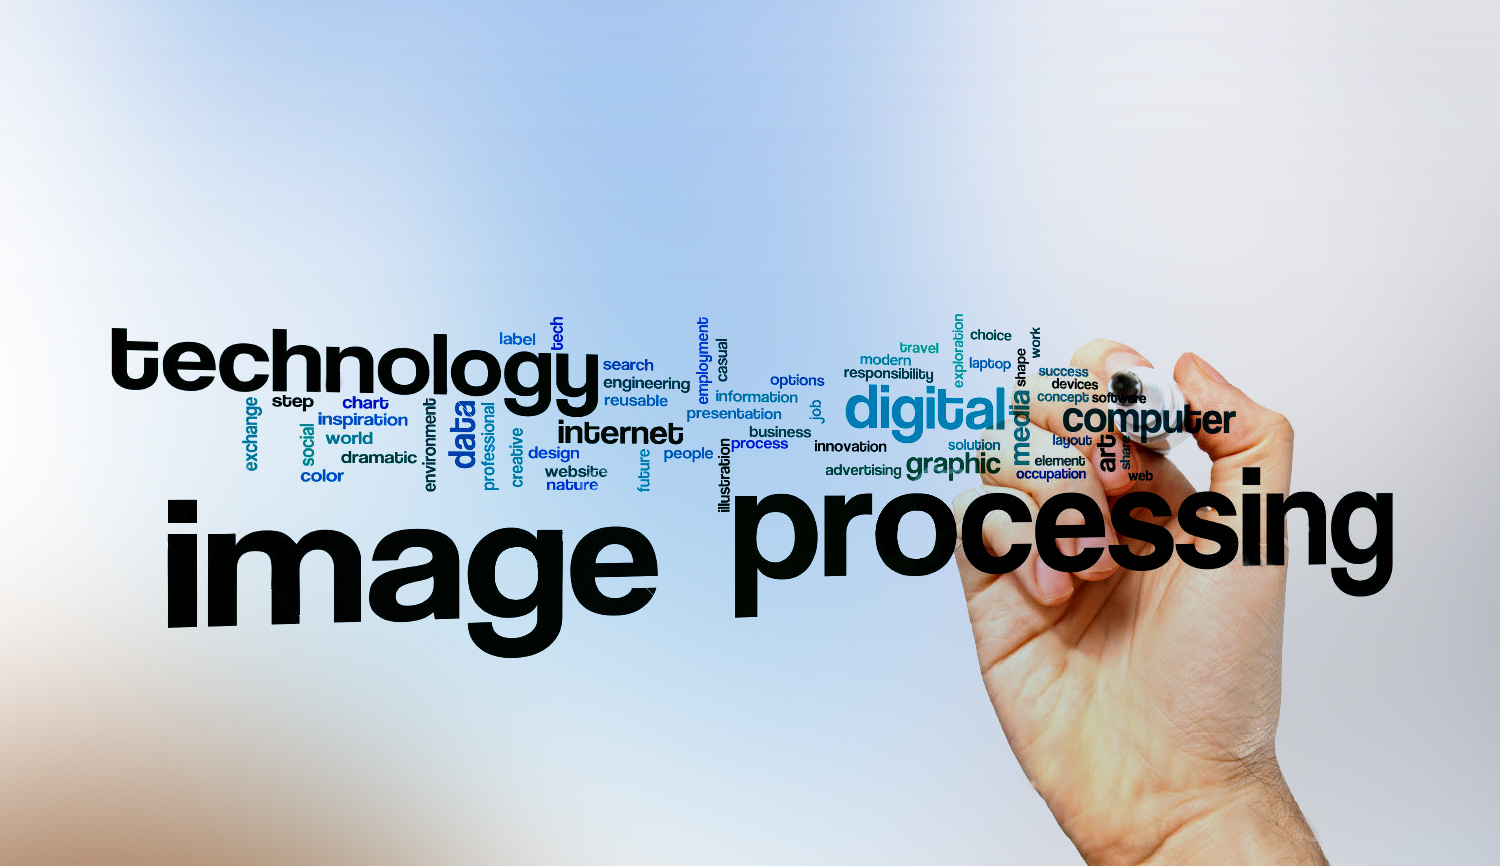 Phd thesis digital image processing